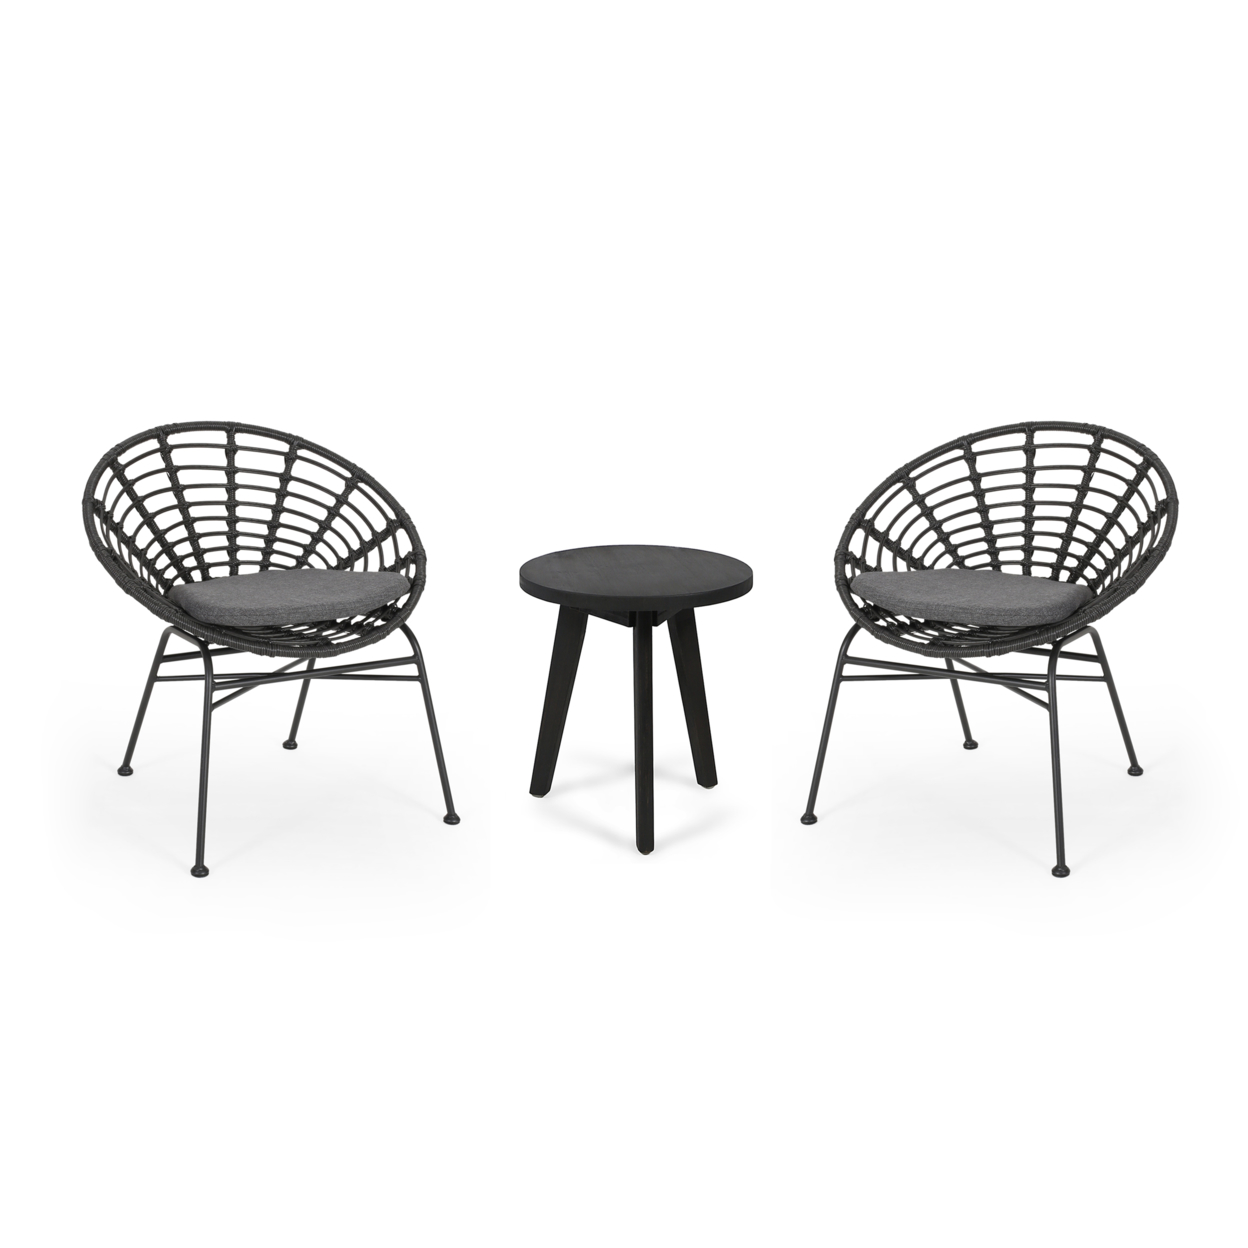 Mignon Outdoor 2 Seater Acacia Wood Chat Set - Gray, Dark Gray, Dark Gray Finish